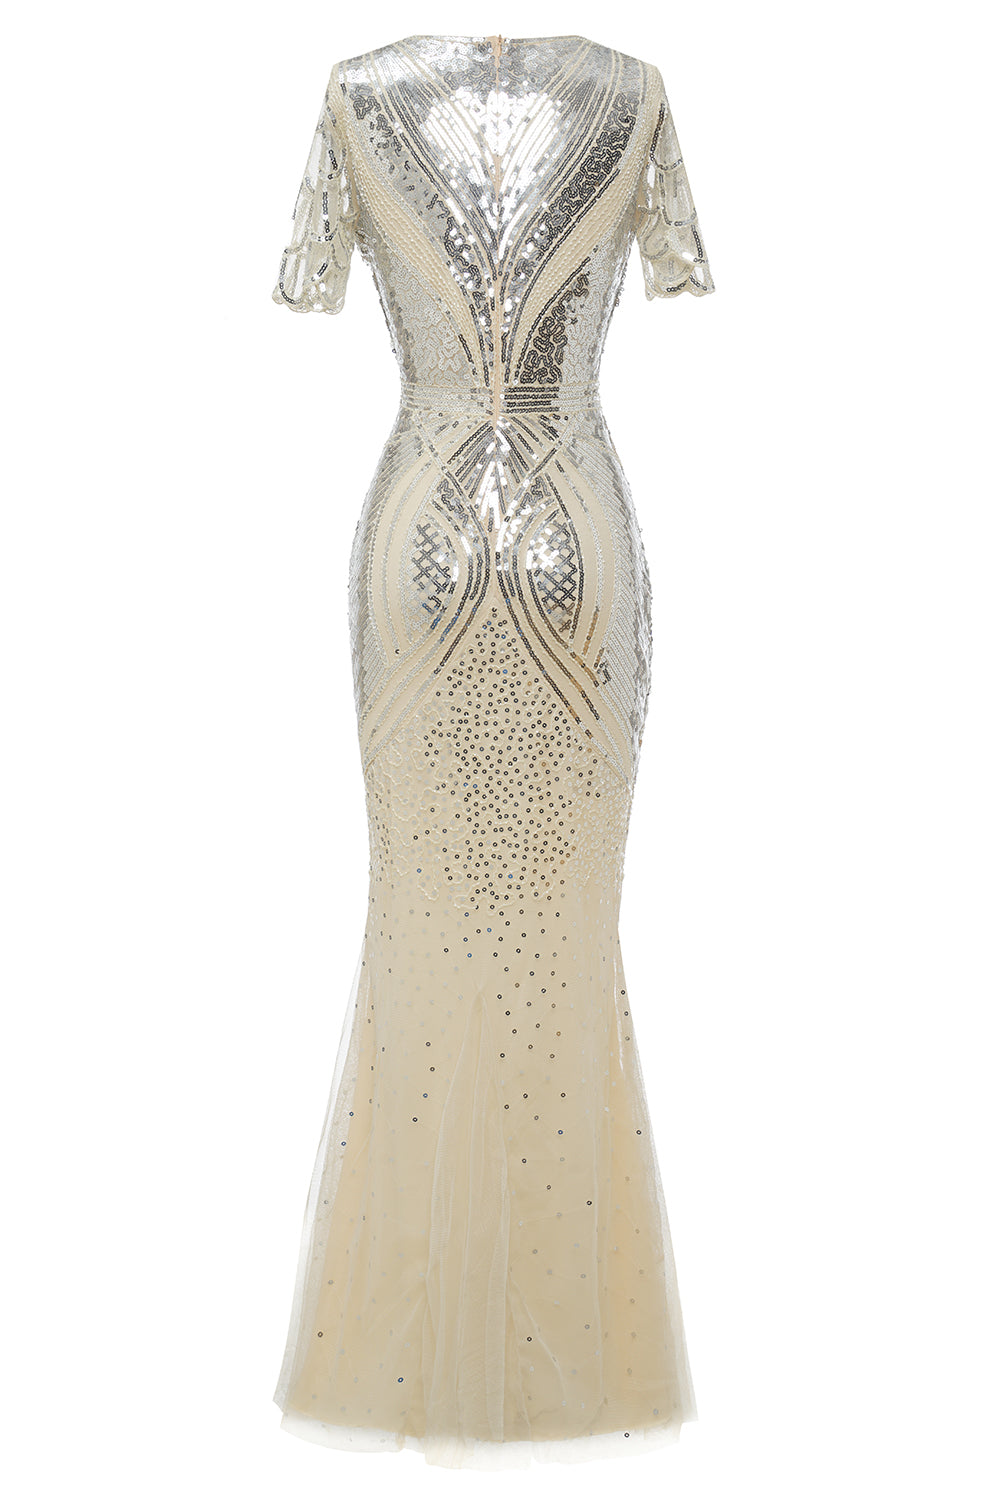 ZAPAKA Femmes 1920s Prom Robe Sequins Gaine Style Long Gatsby Robe